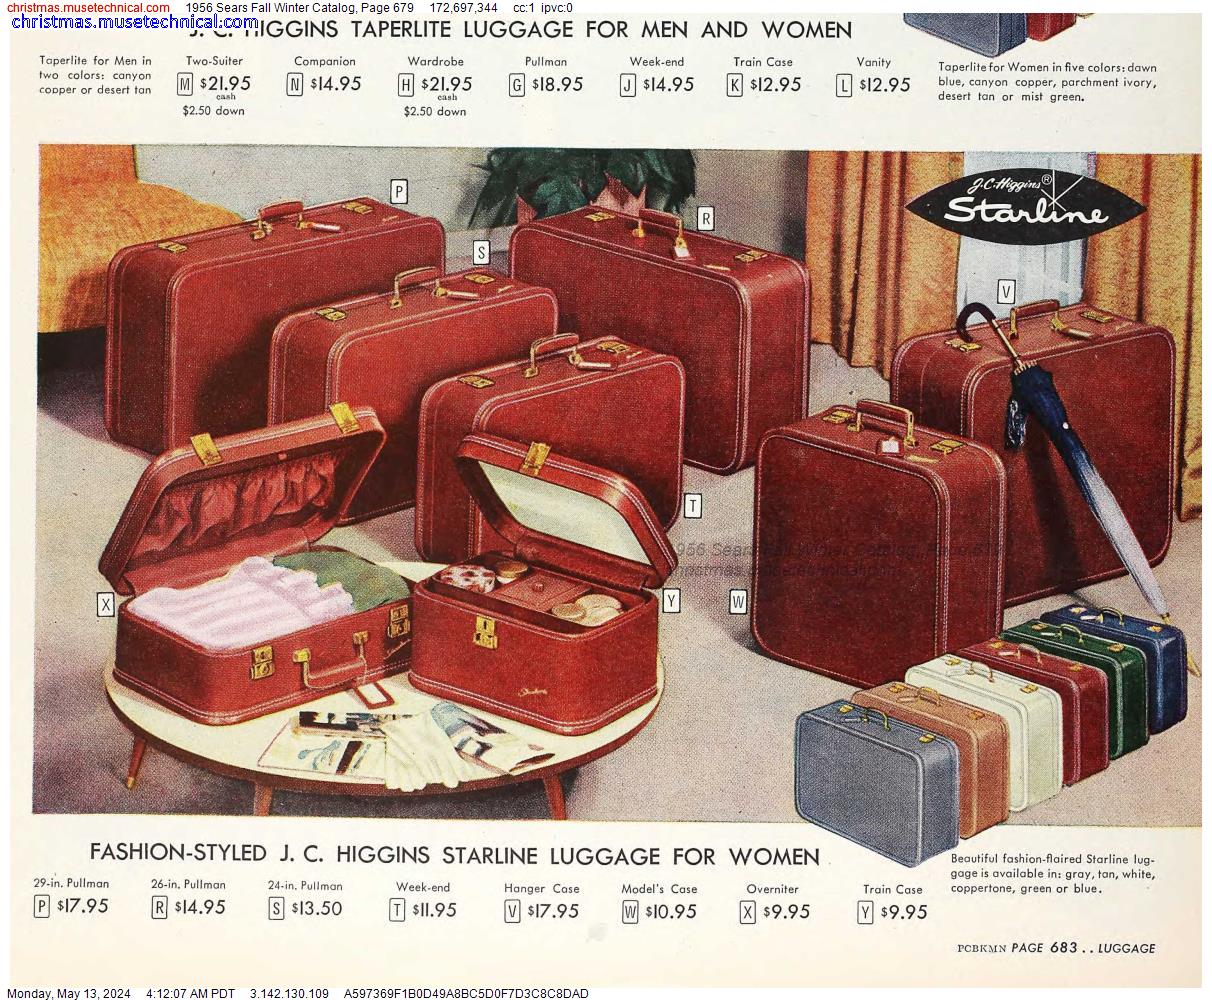 1956 Sears Fall Winter Catalog, Page 679